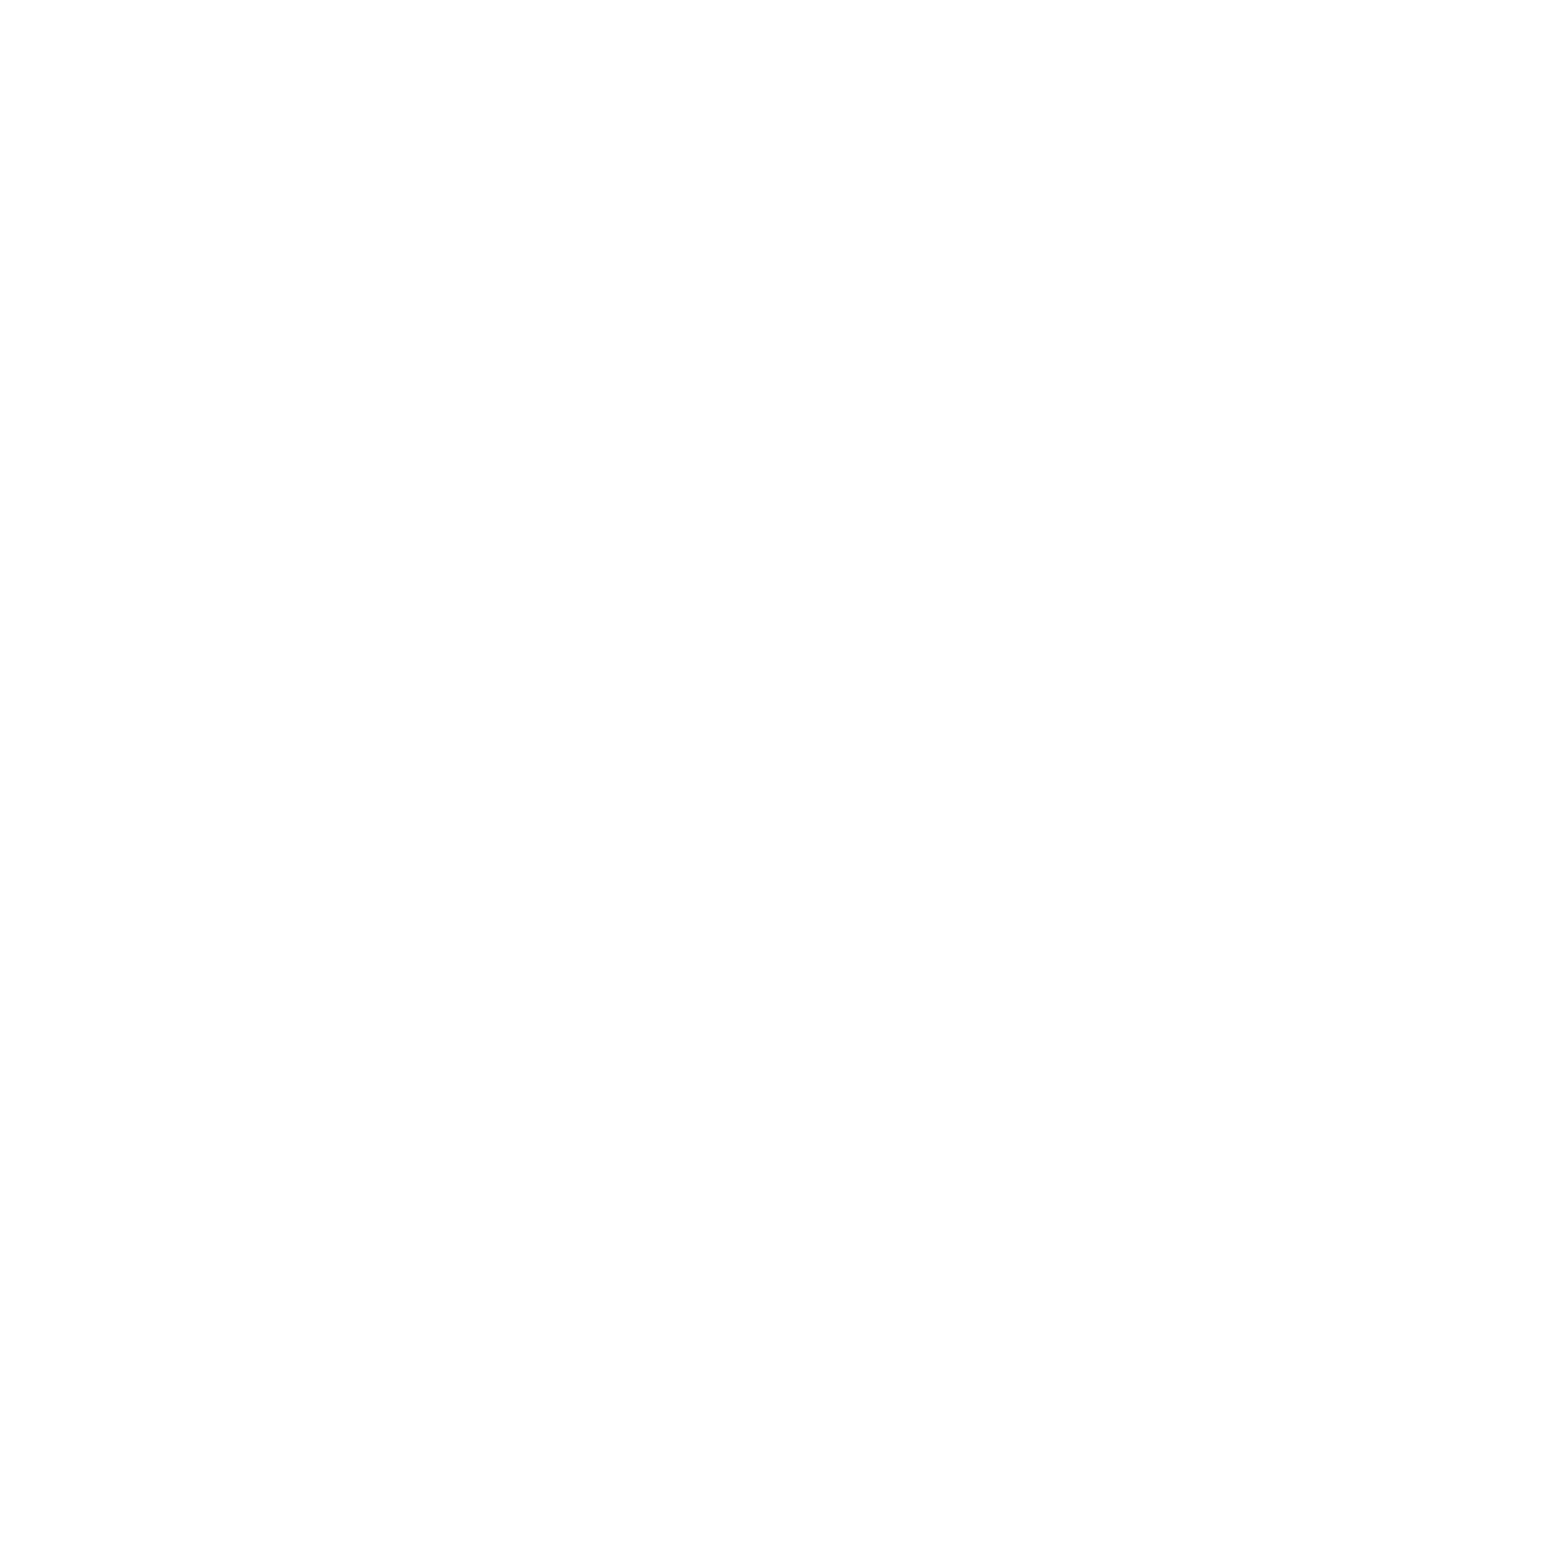 Bank of China logo for dark backgrounds (transparent PNG)